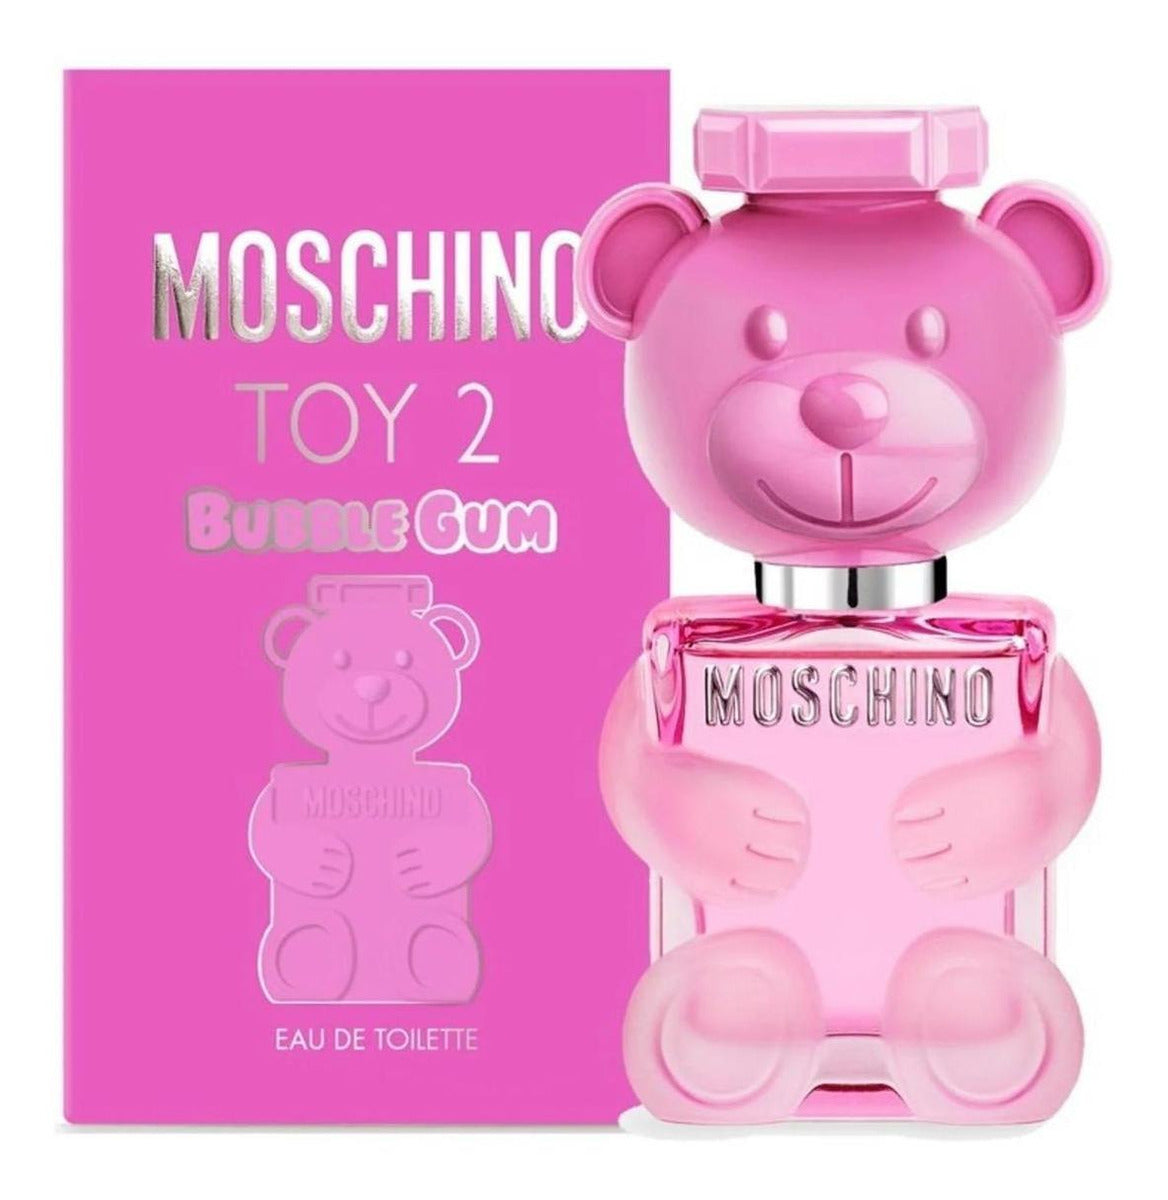 Moschino Toy 2 Bubble Gum 100ml Eau de Toilette Para Mujer